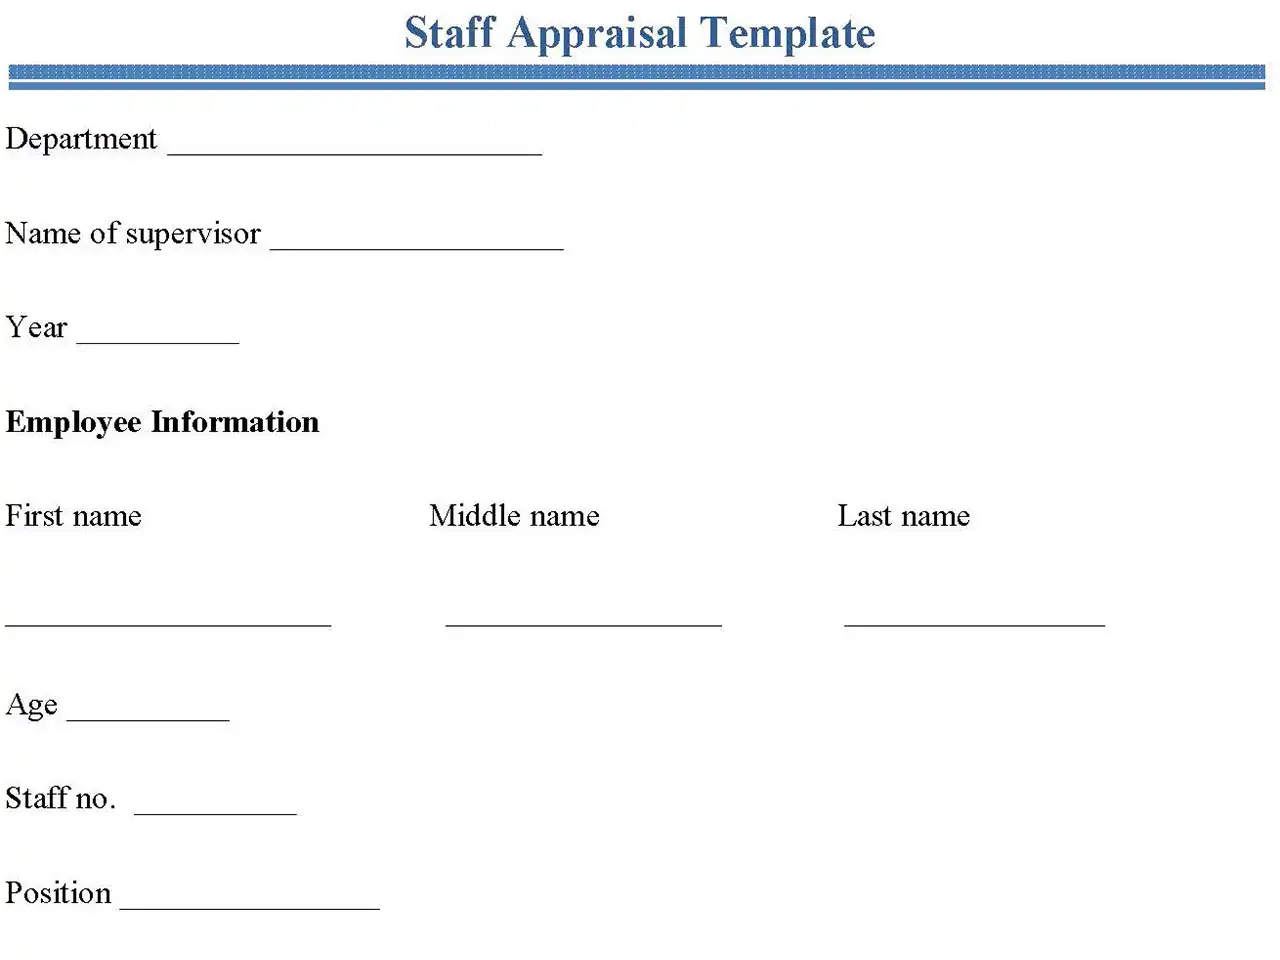 staff-appraisal-pdf-template